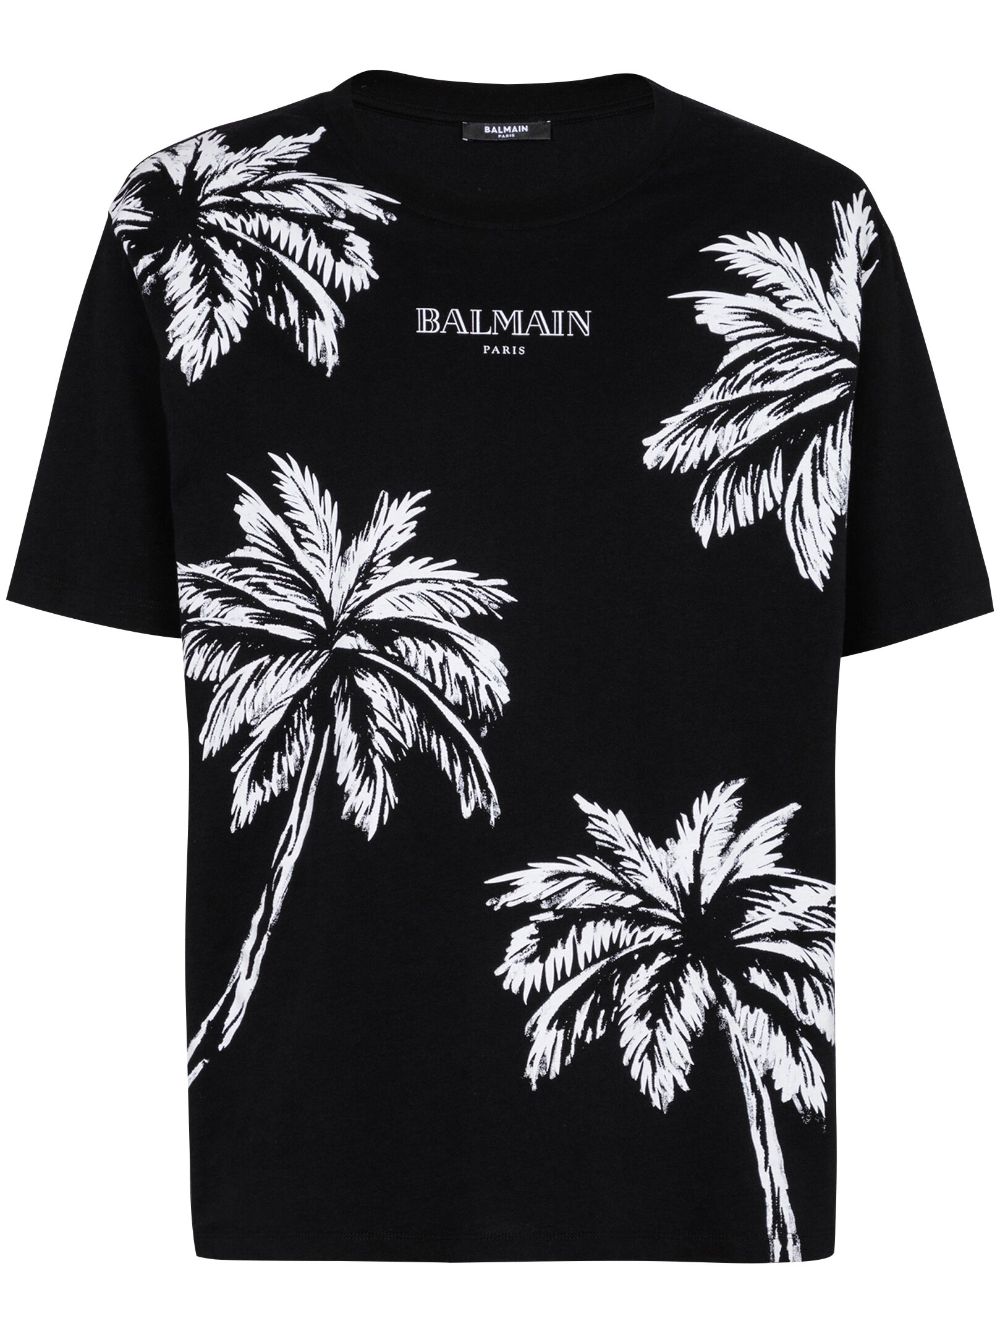 Balmain T-Shirt mit Palmen-Print - Schwarz